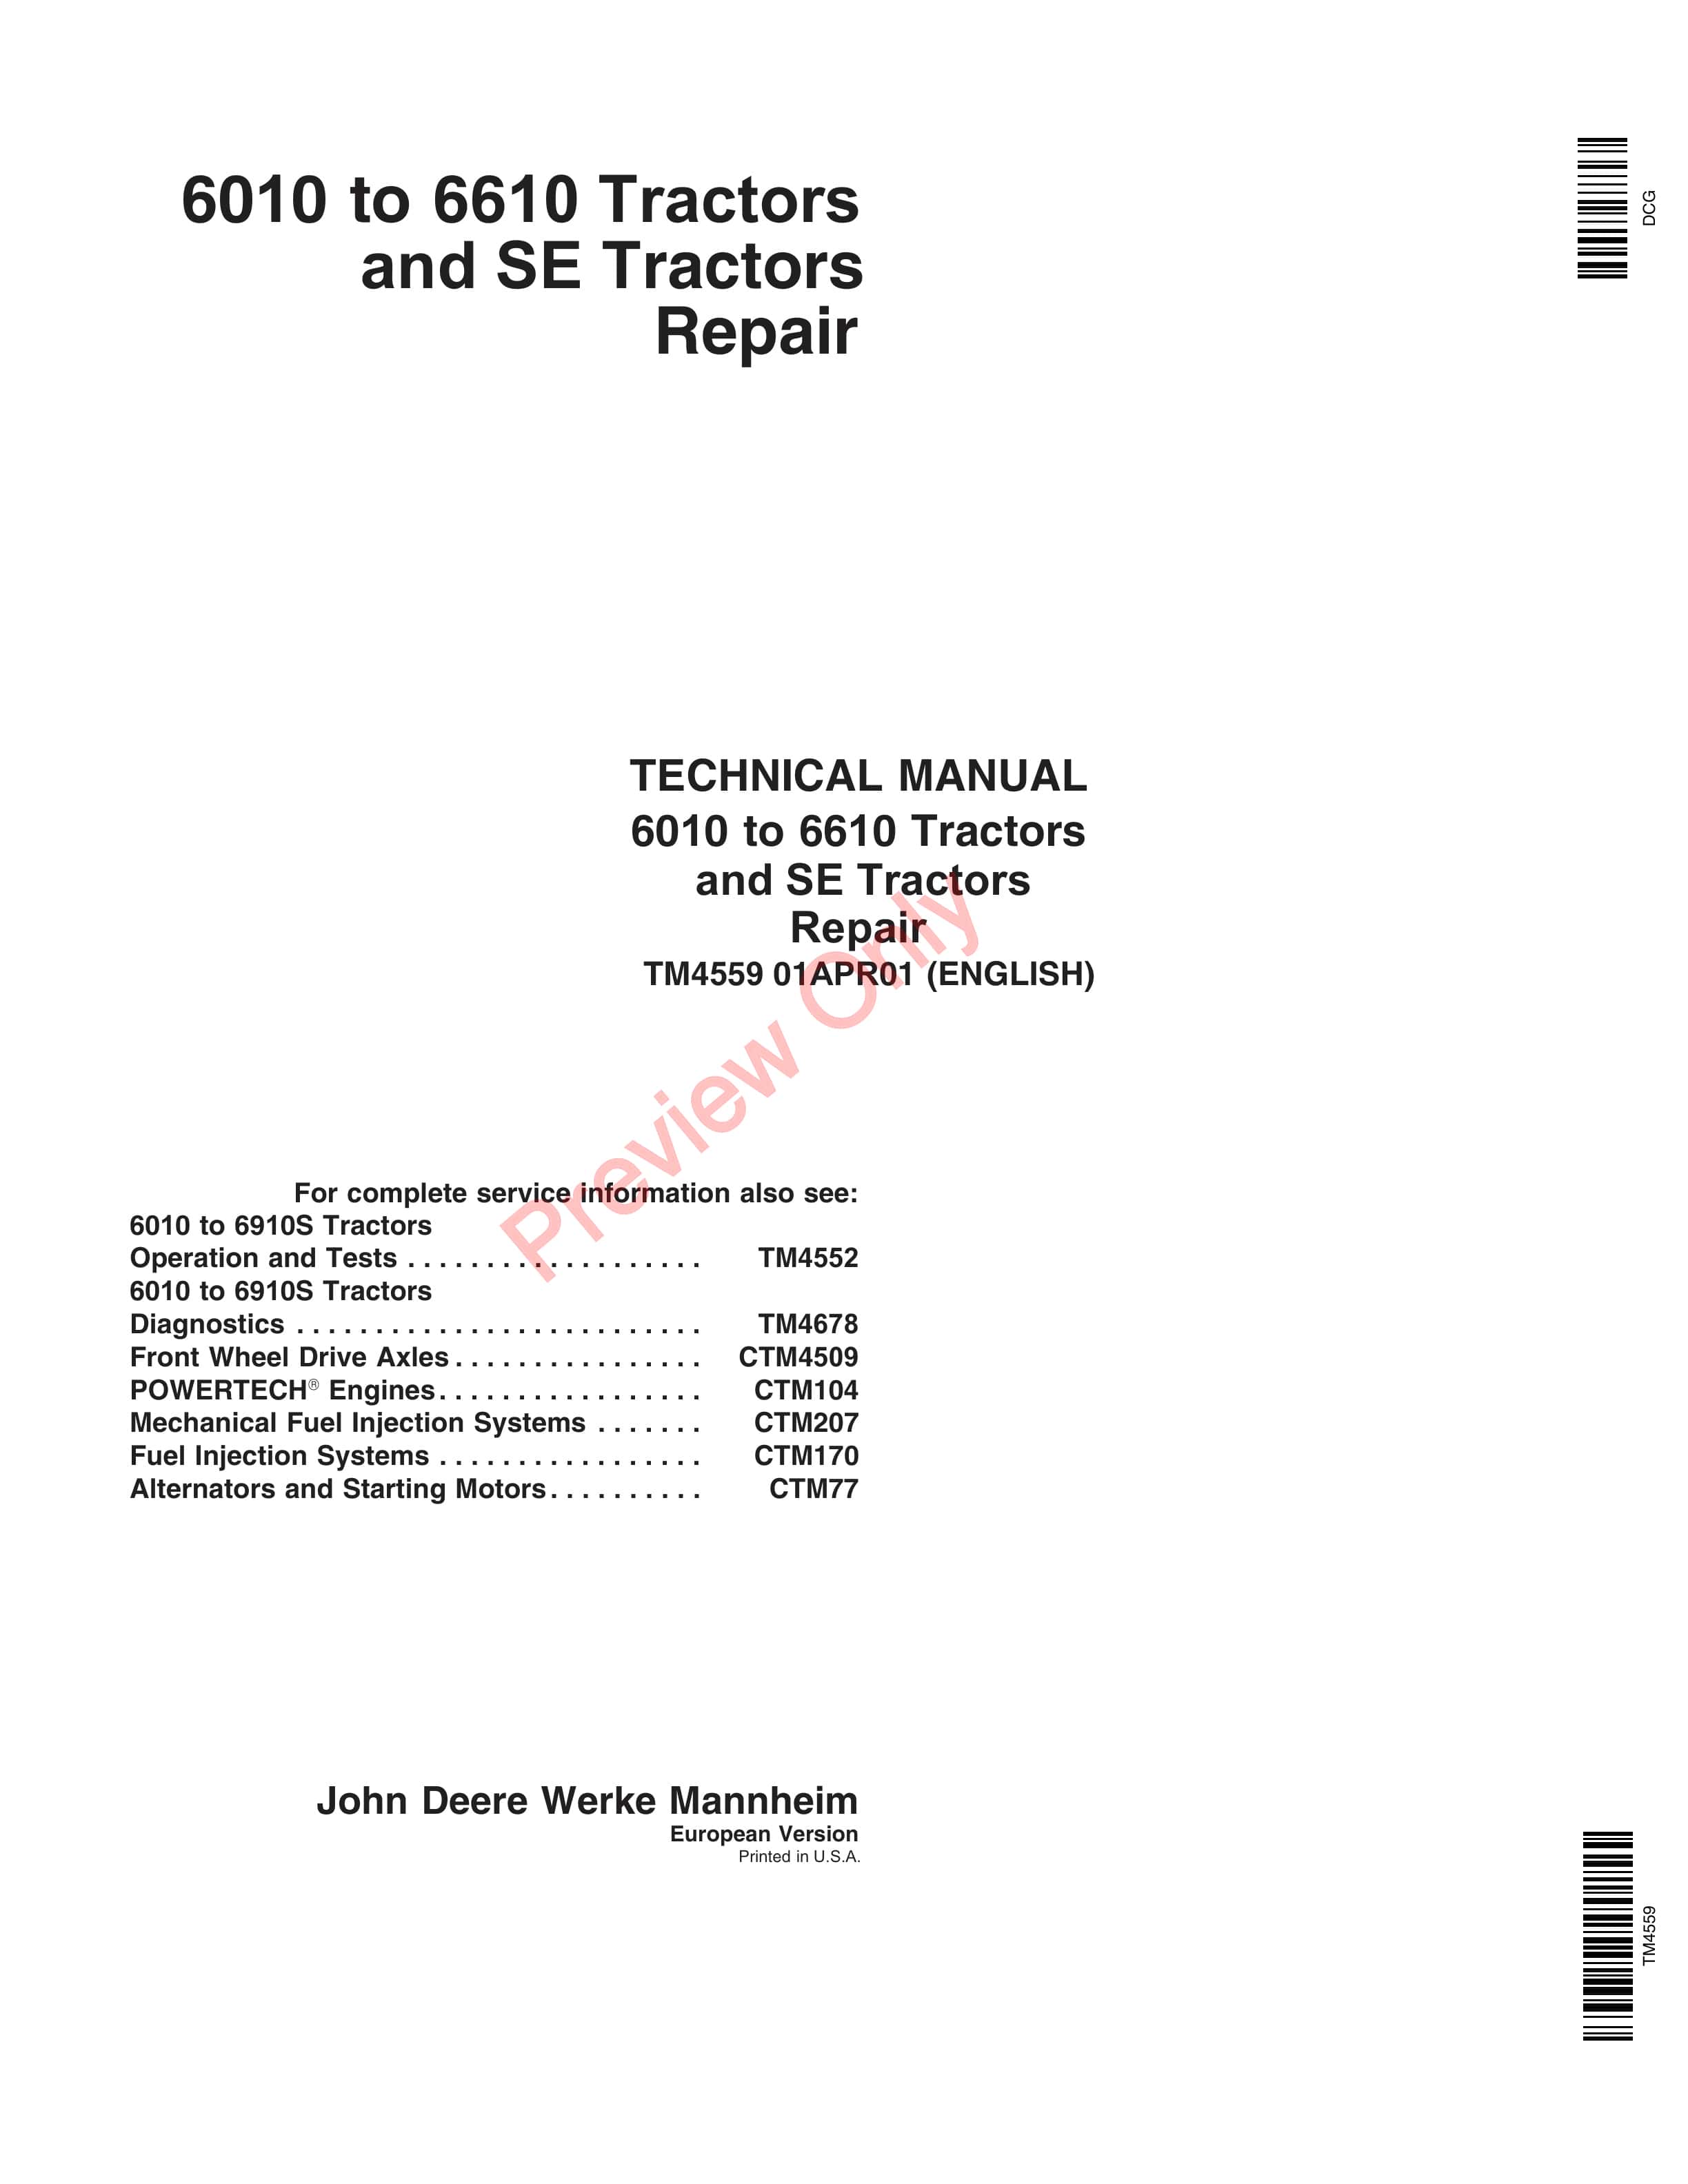 John Deere 6010 to 6610 Tractors and SE Tractors Service Information TM4559 01APR01-1